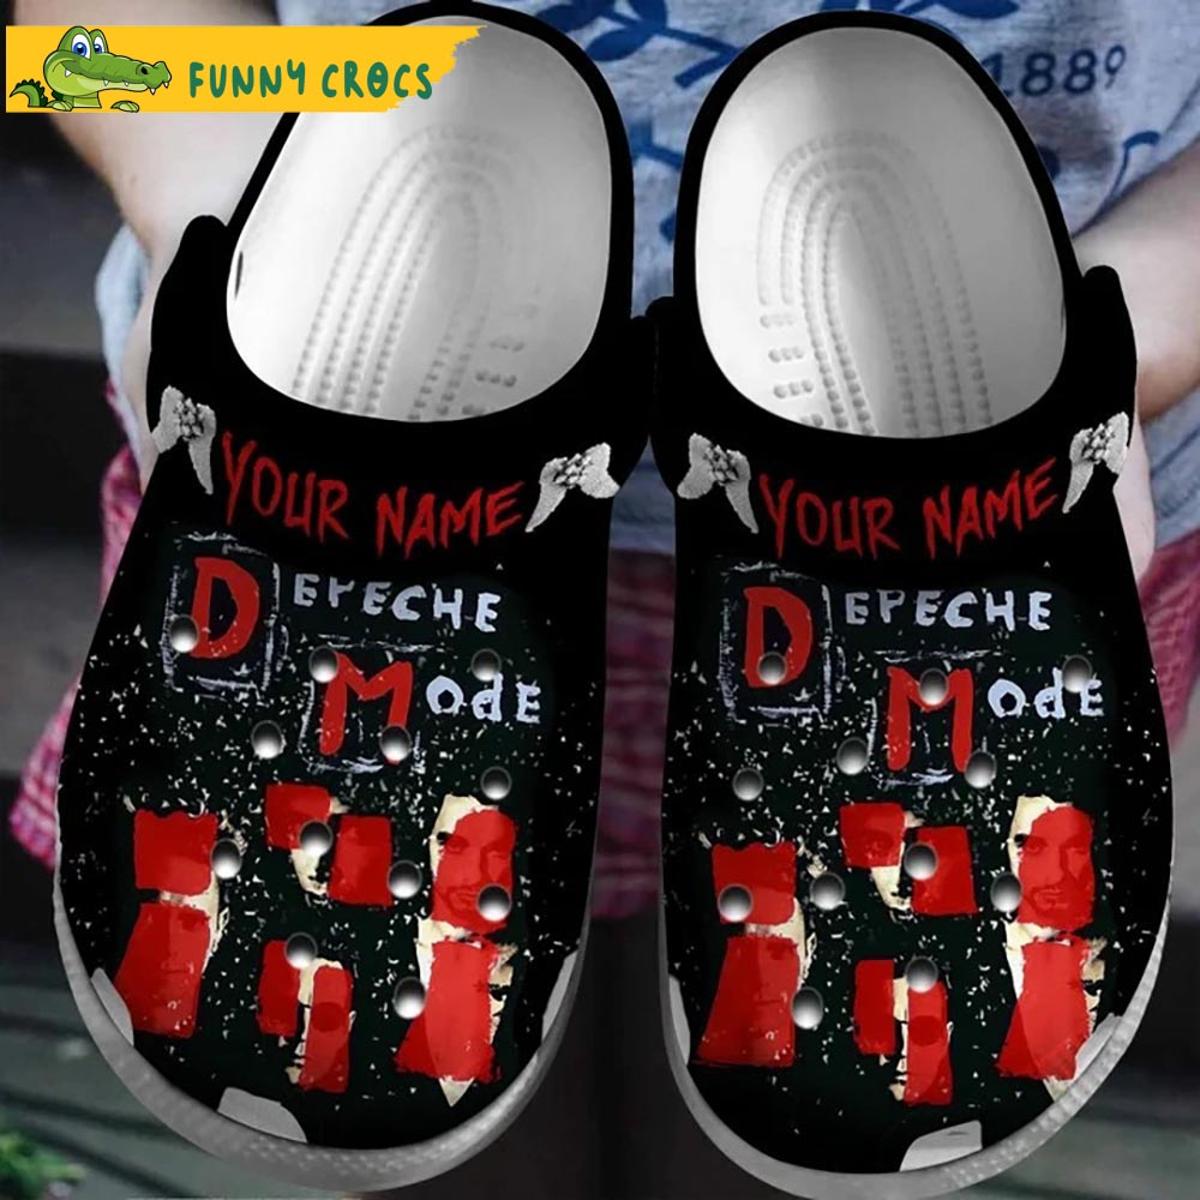 Depeche Mode Limited Edition White Crocs Clog Shoes